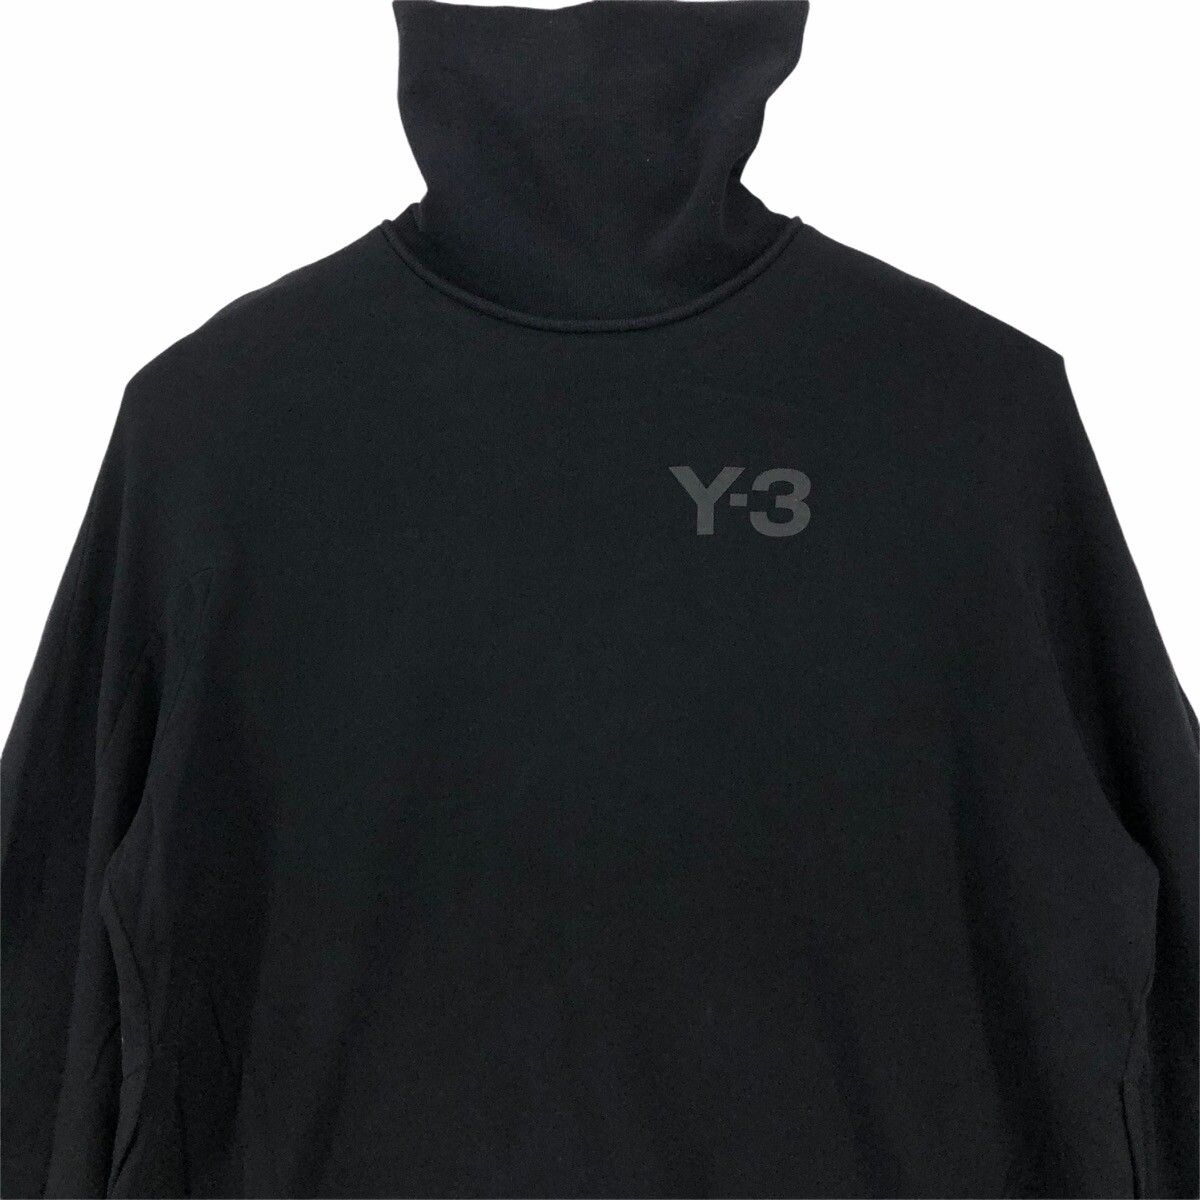 Adidas Yohji Yamamoto Y-3 Pullover Size US M / EU 48-50 / 2 - 2 Preview